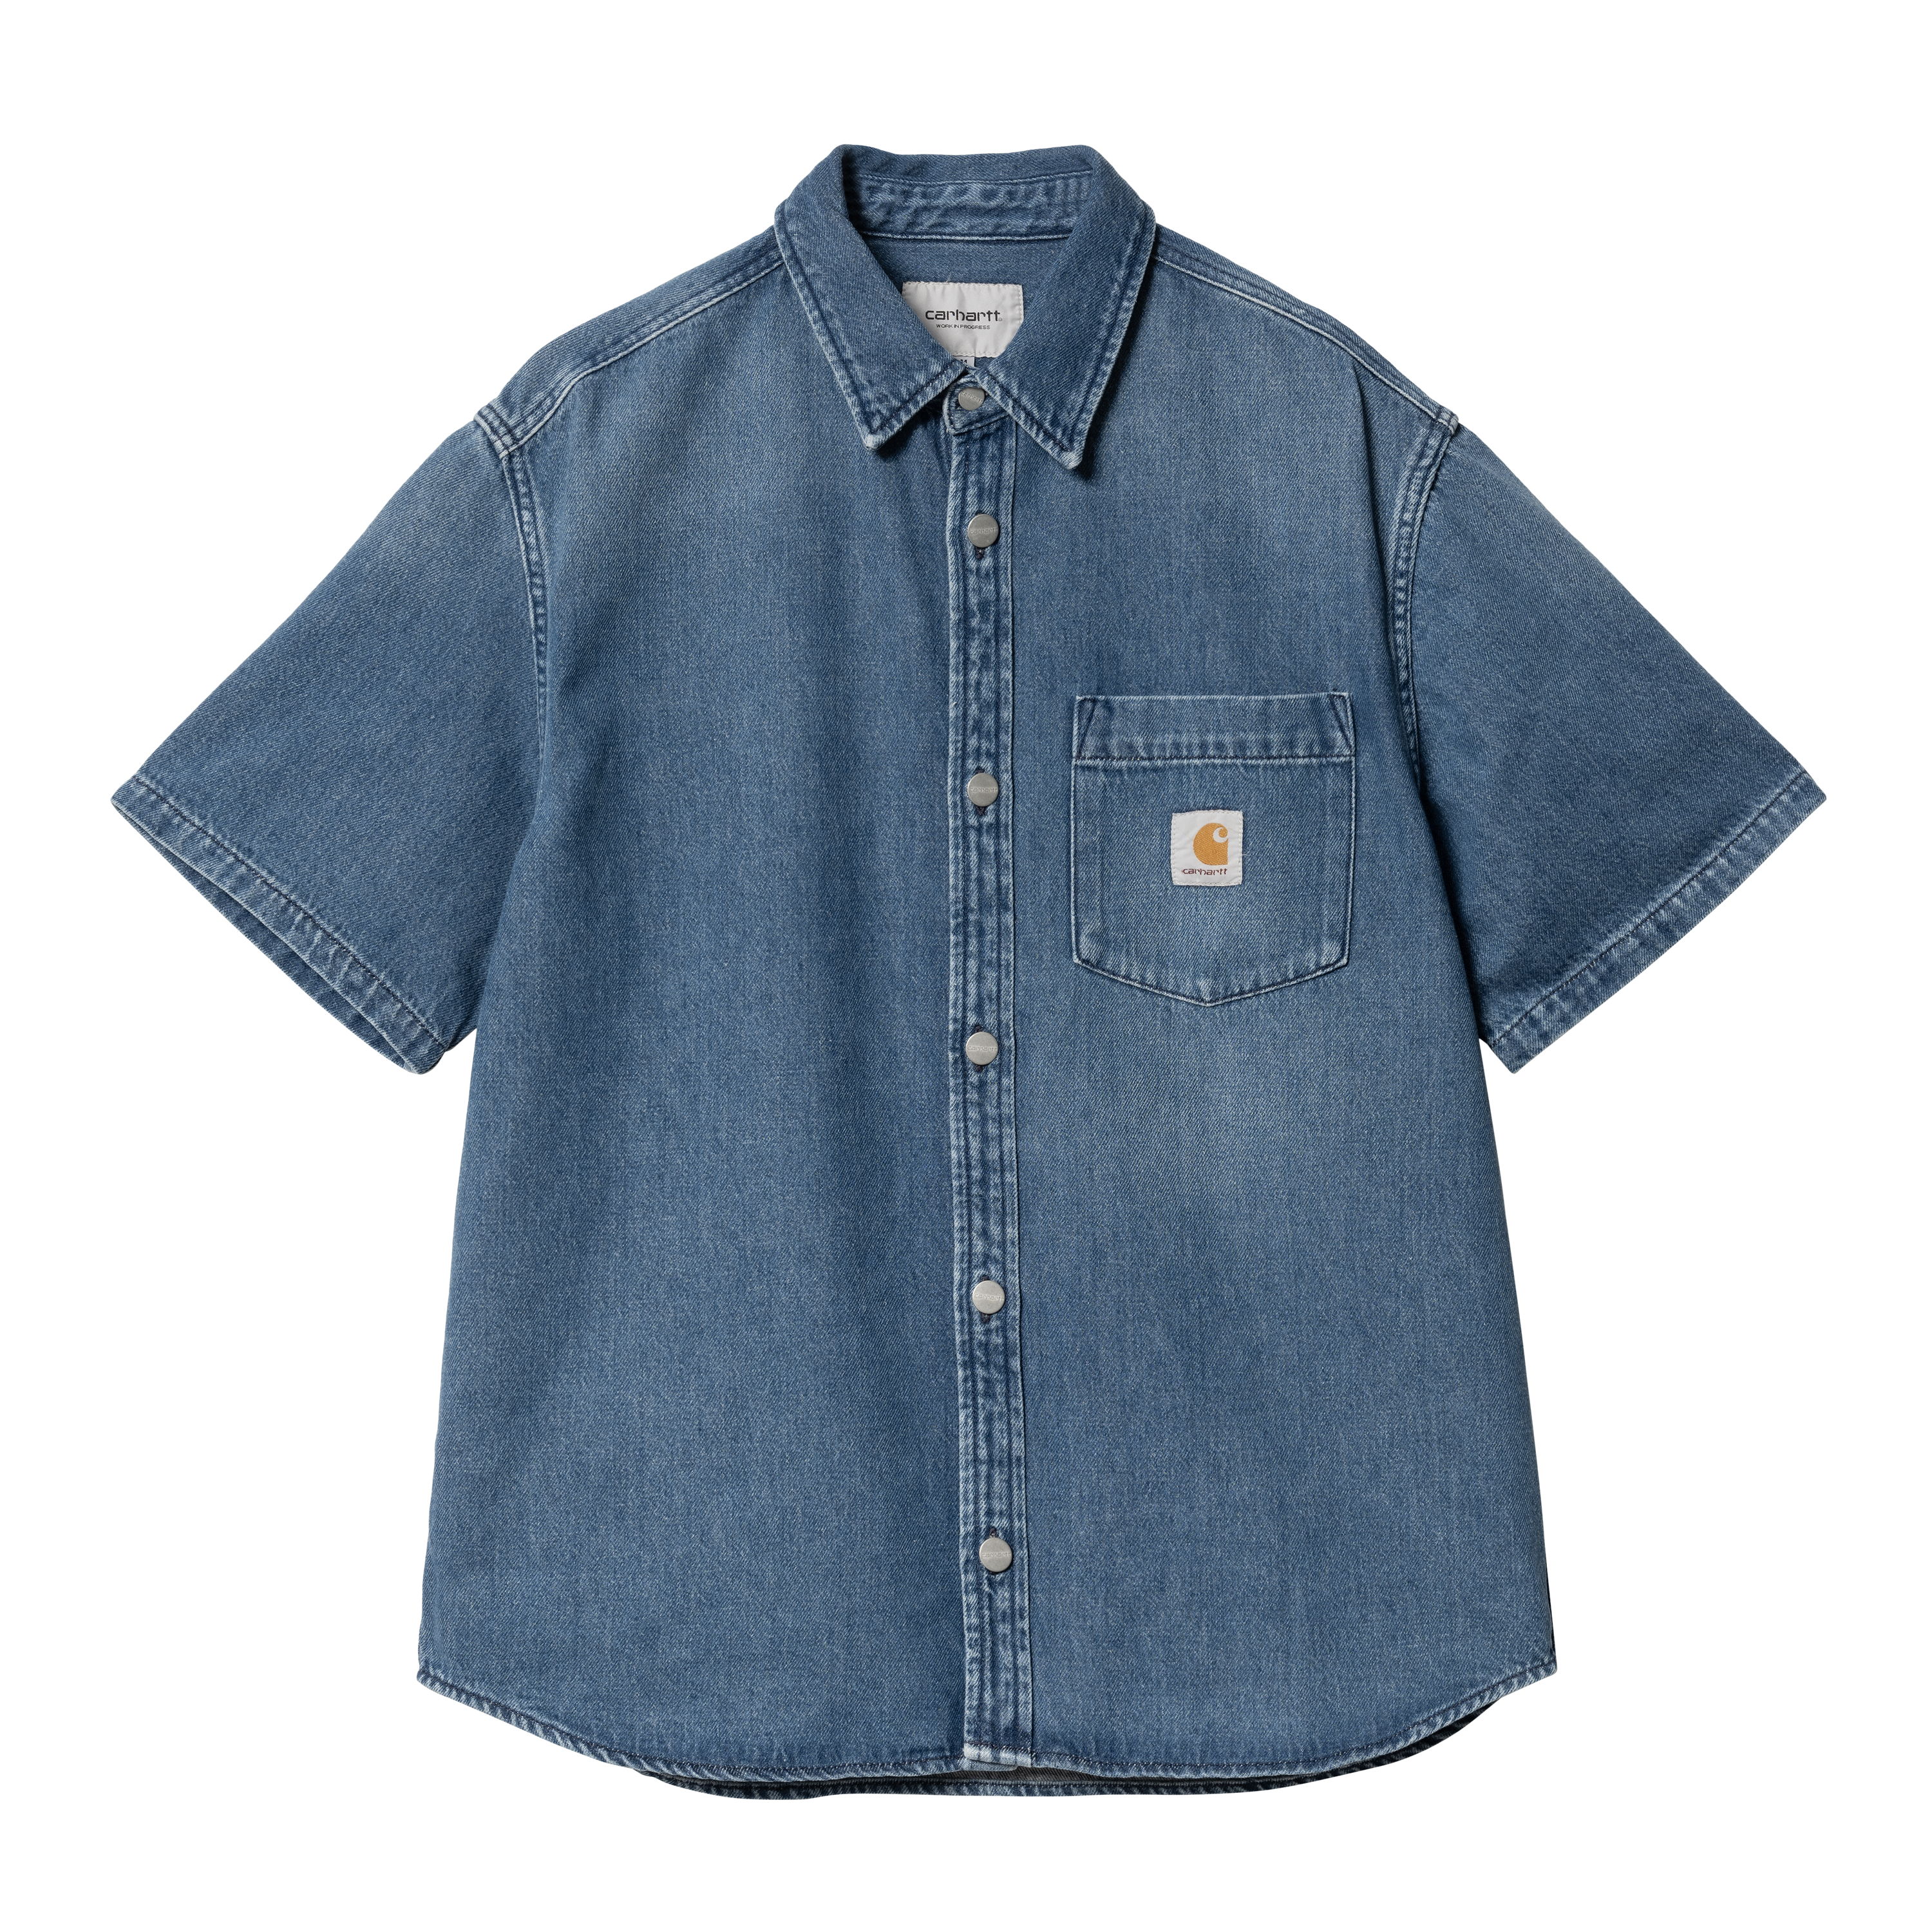 Carhartt WIP Short Sleeve Ody Shirt in Blue